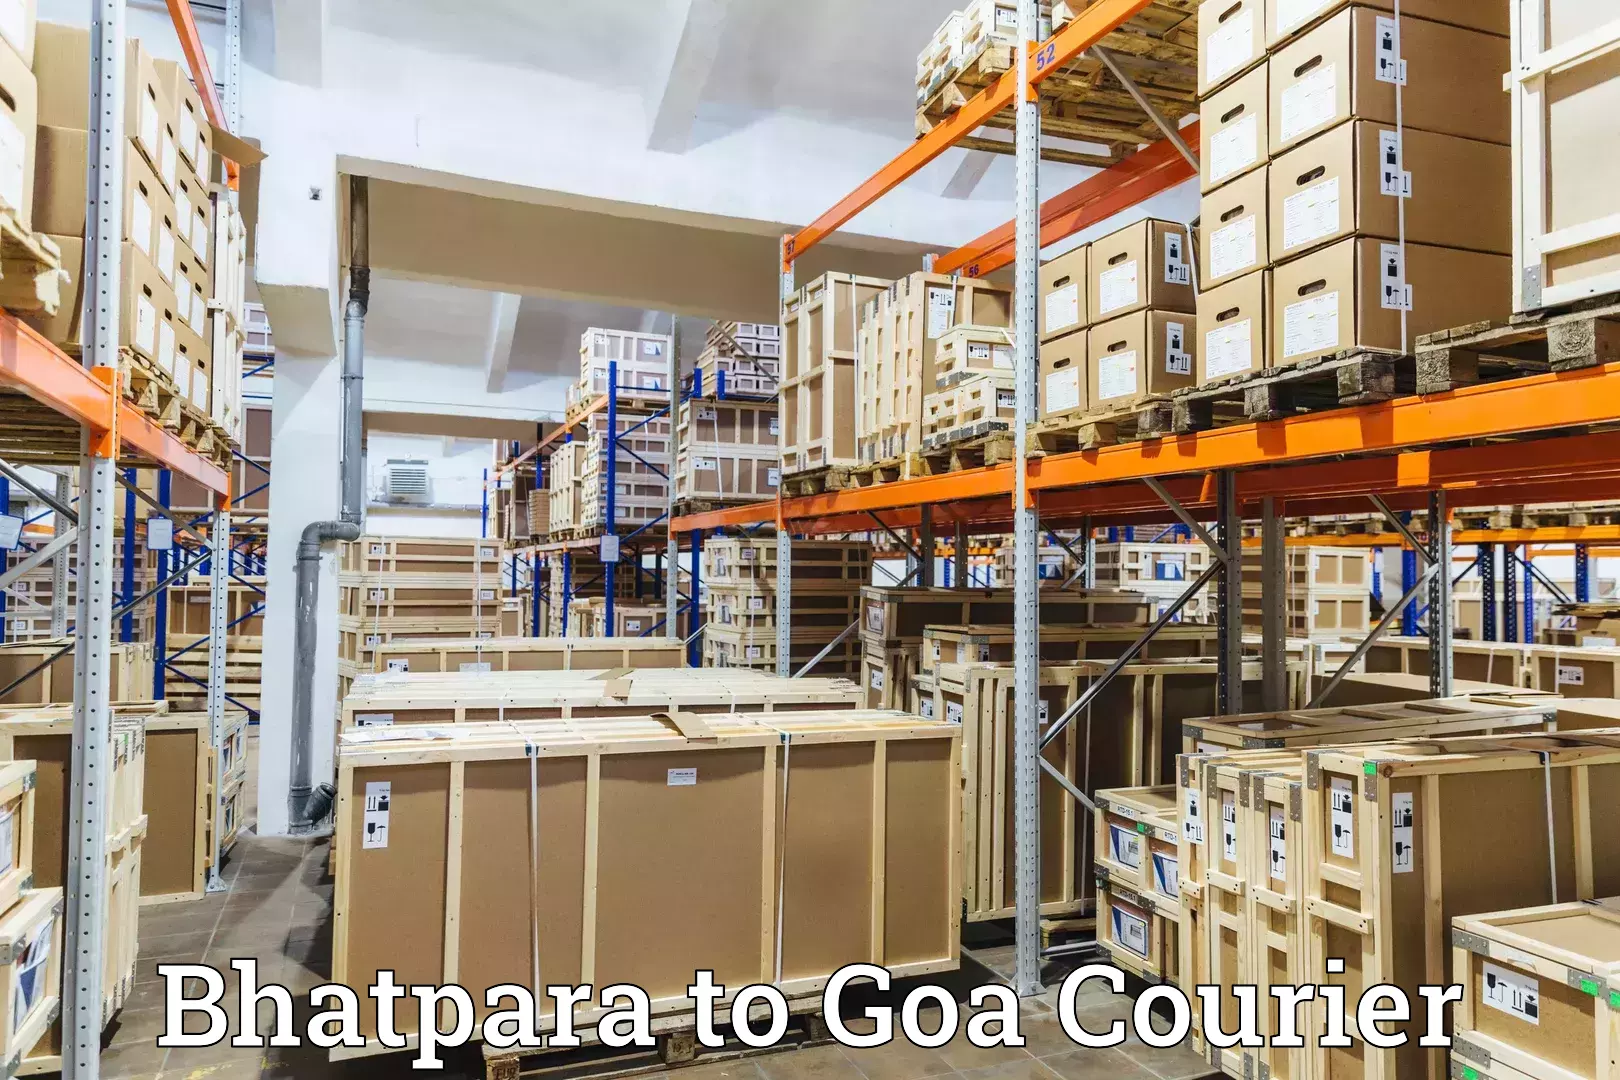 Courier service partnerships Bhatpara to Goa